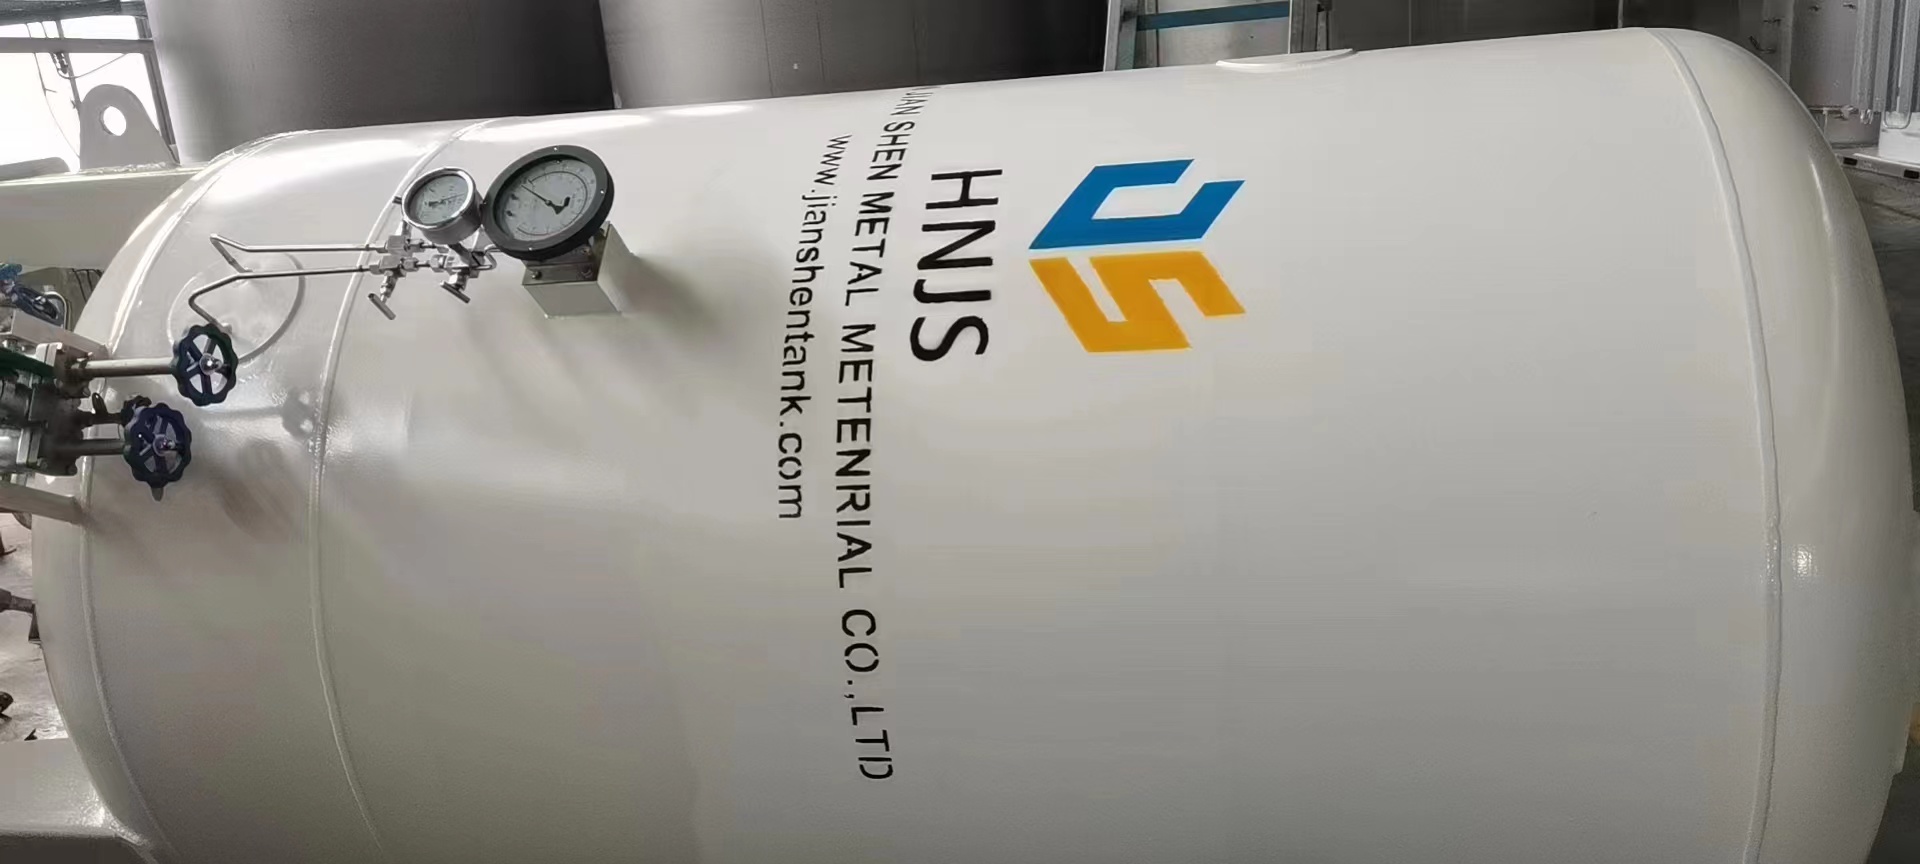 Pressurization process of cryogenic storage tanks